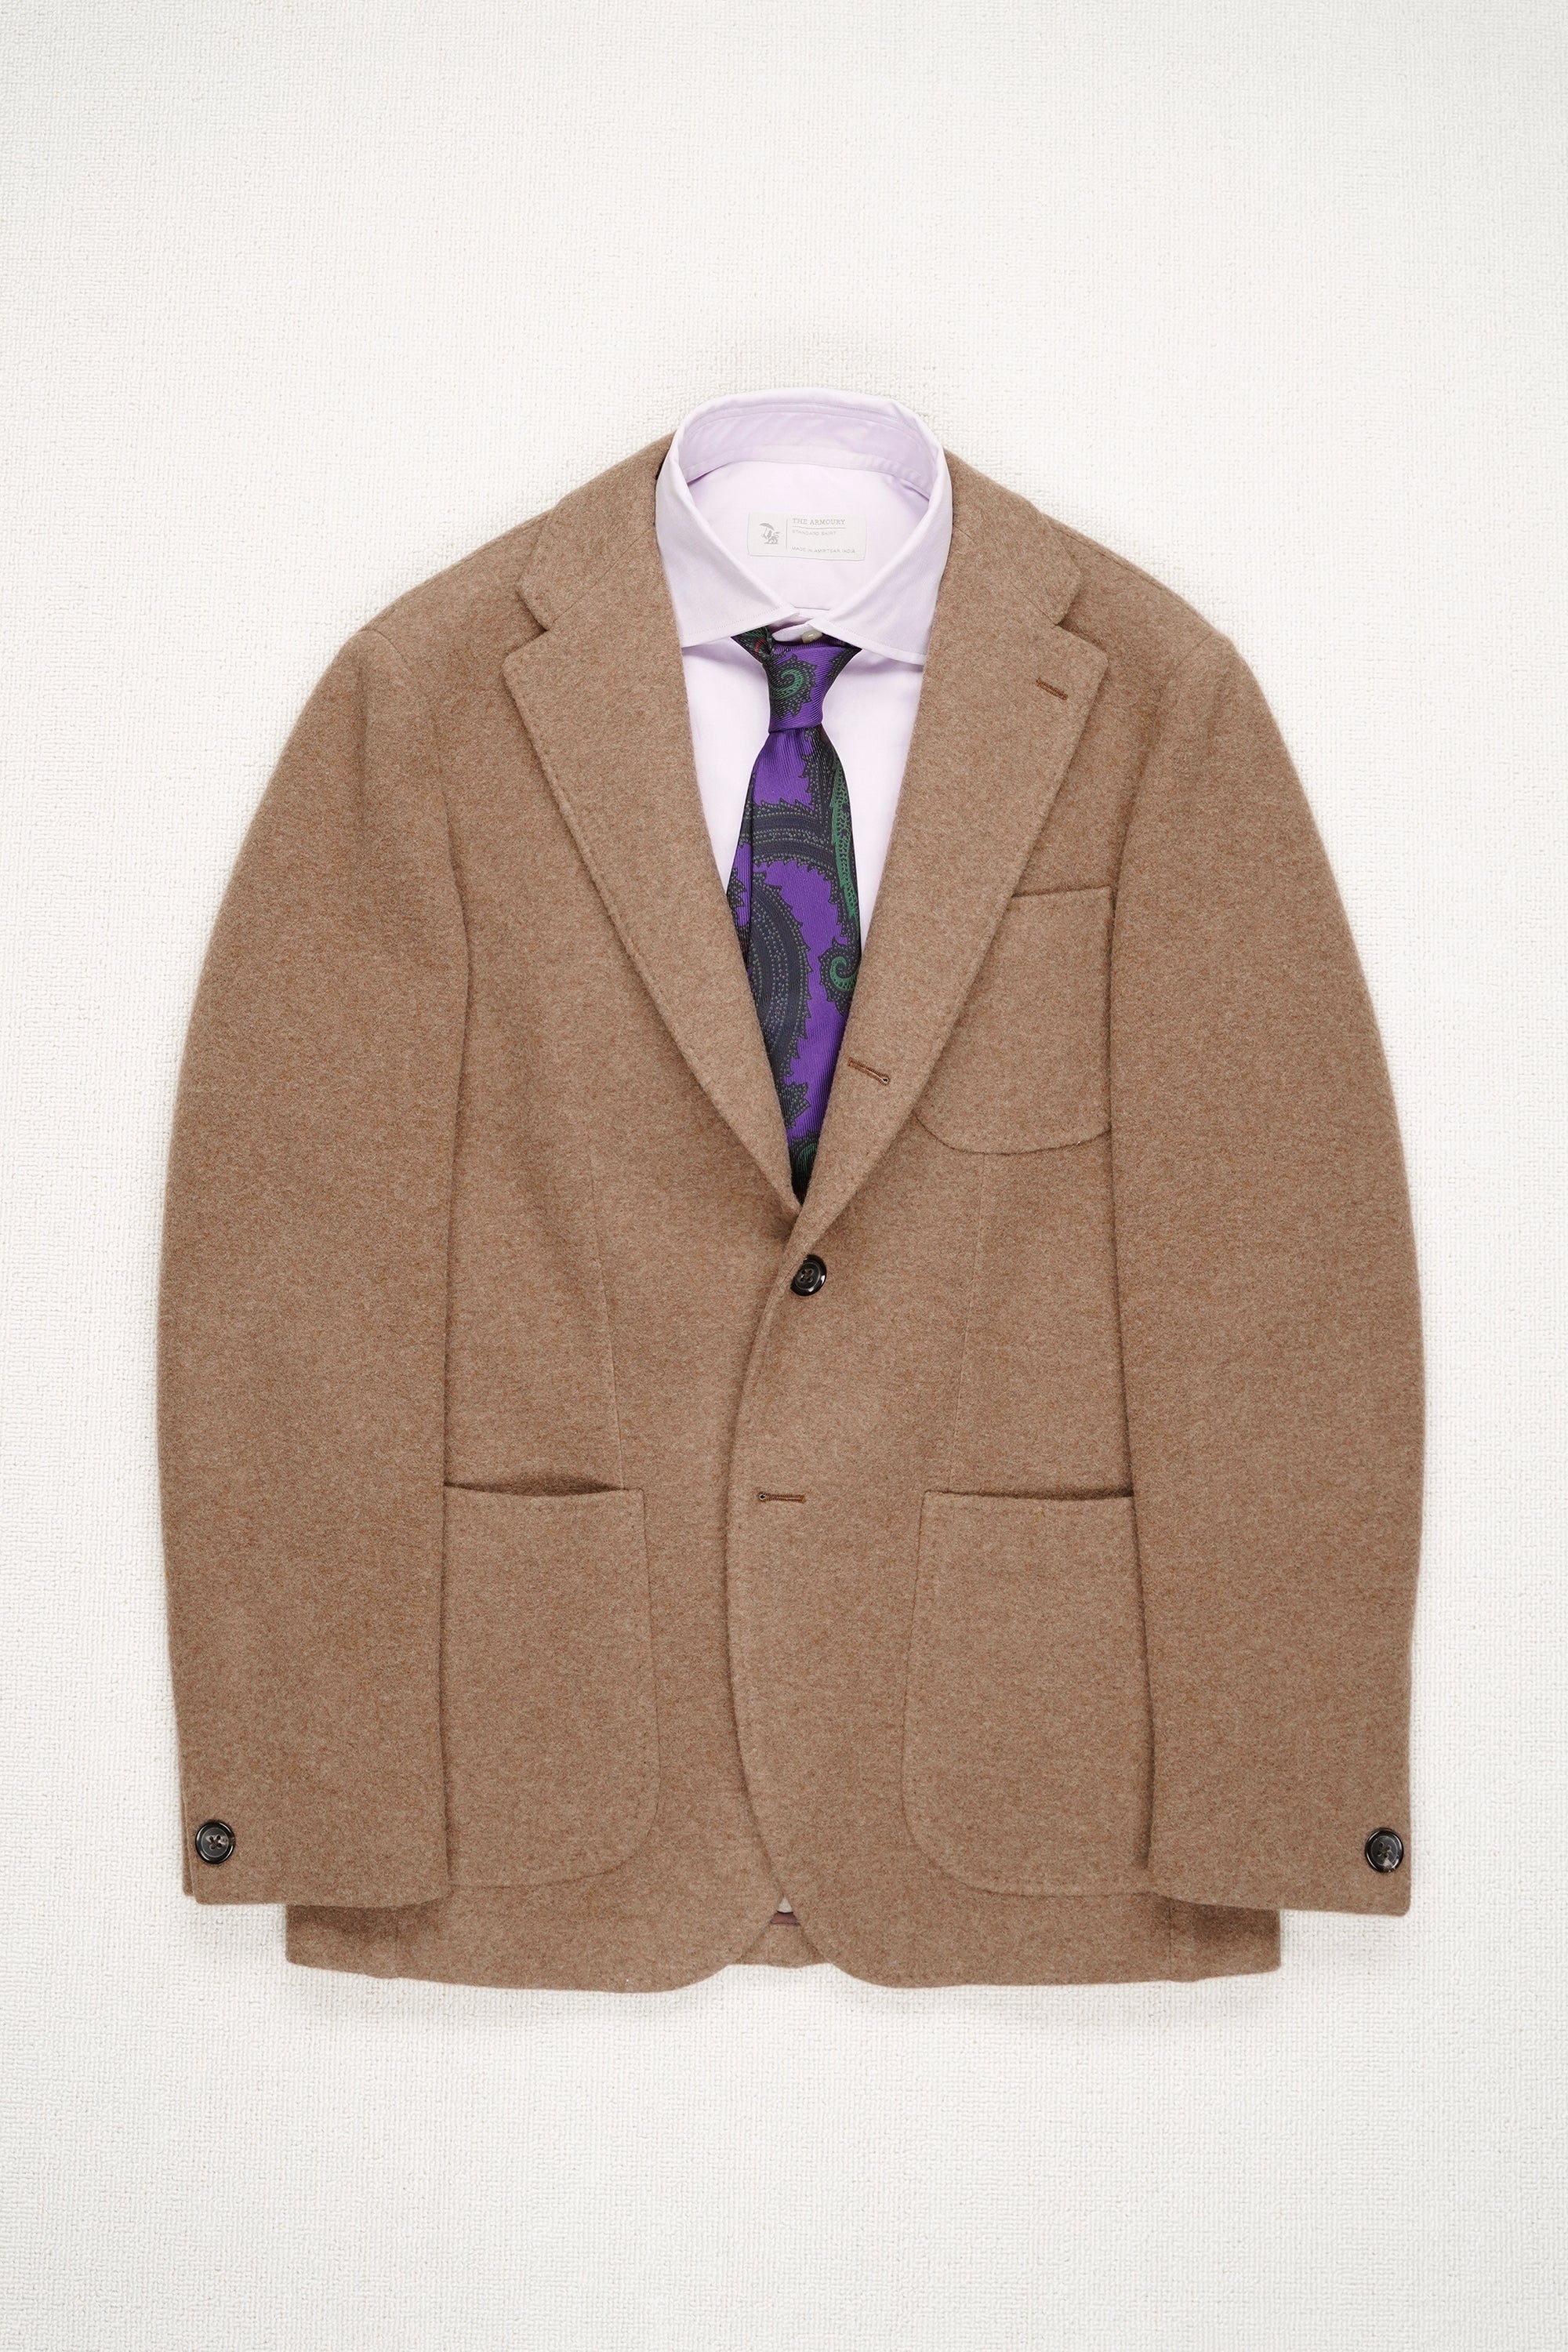 Ring Jacket Model 297 Brown Wool/Cashmere/Nylon Sport Coat